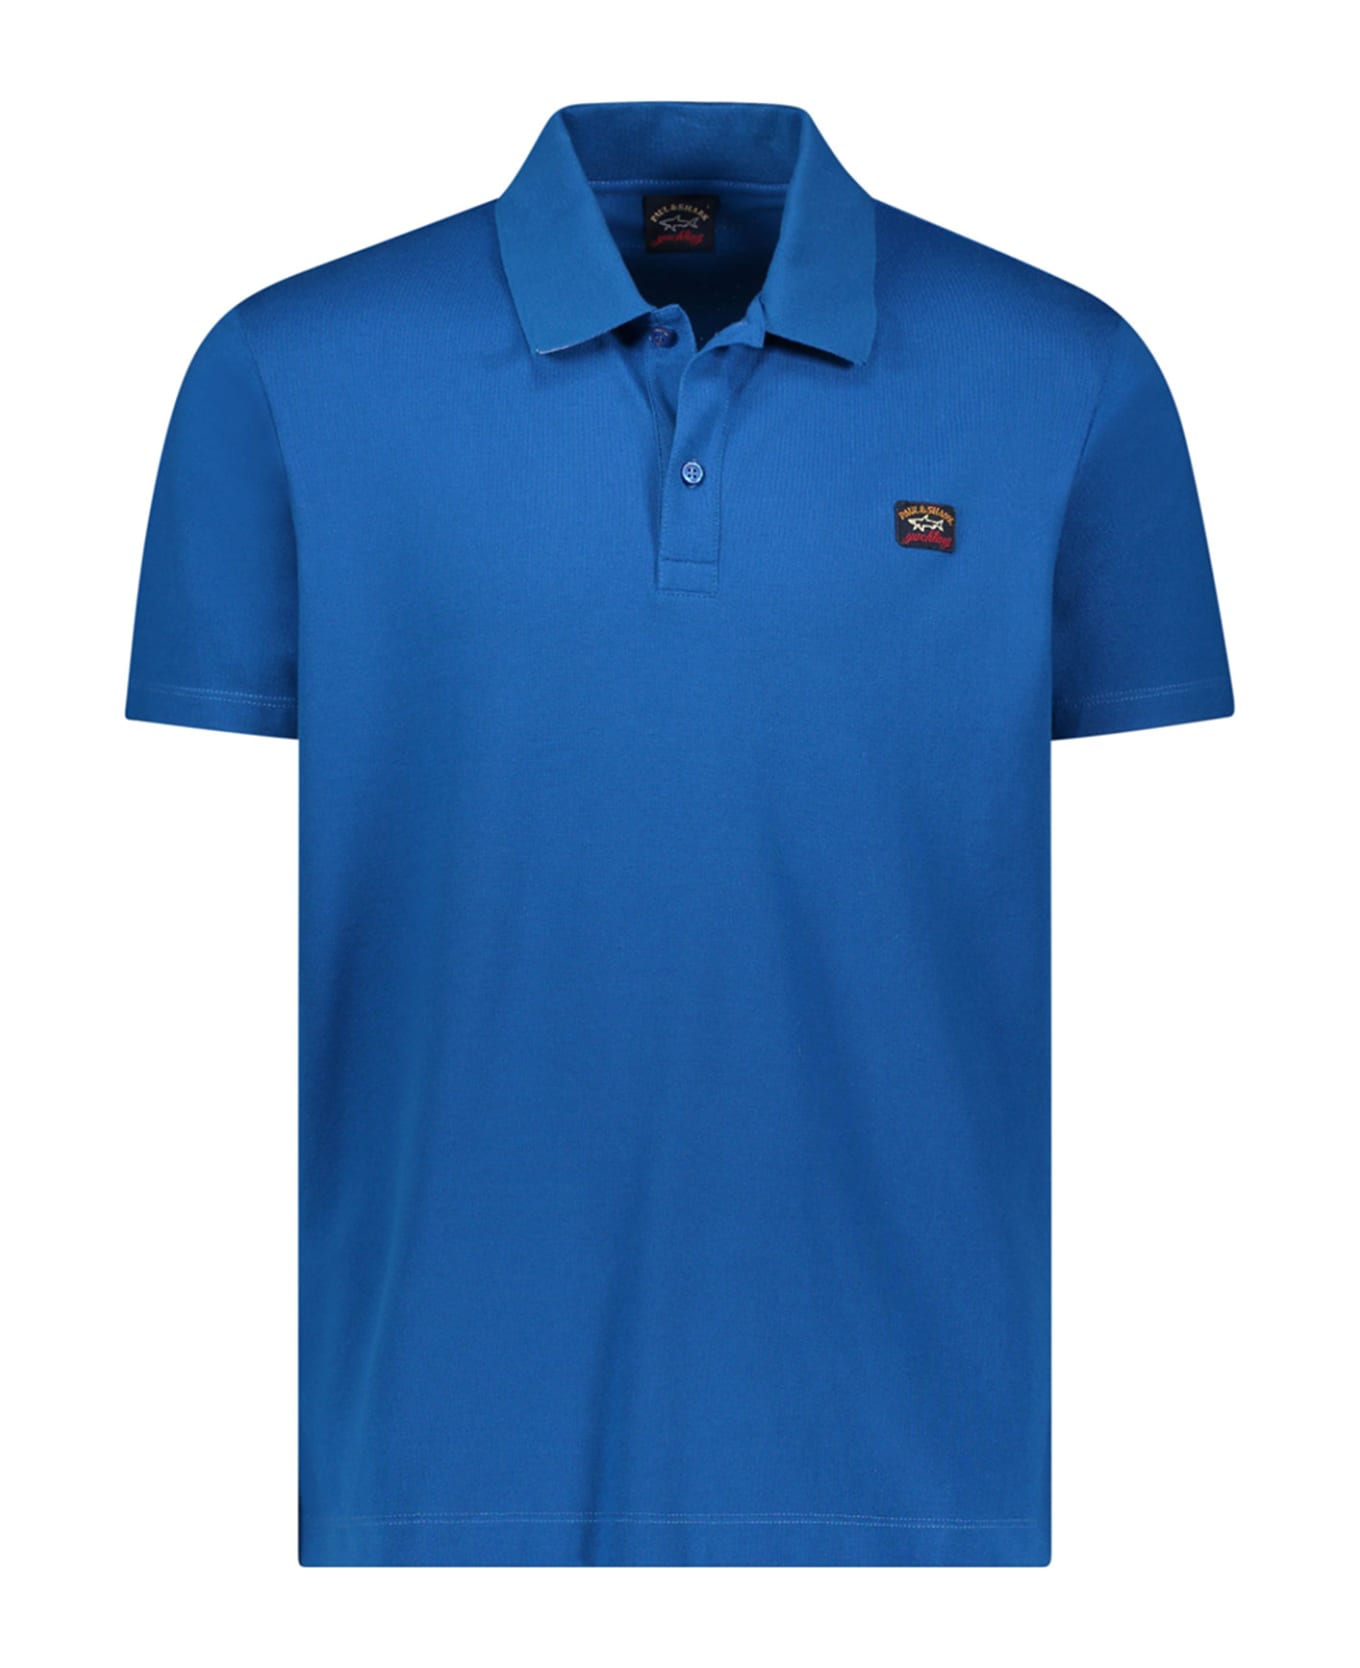 Paul&Shark Cotton Polo Shirt With Contrasting Detail - COBALT BLUE